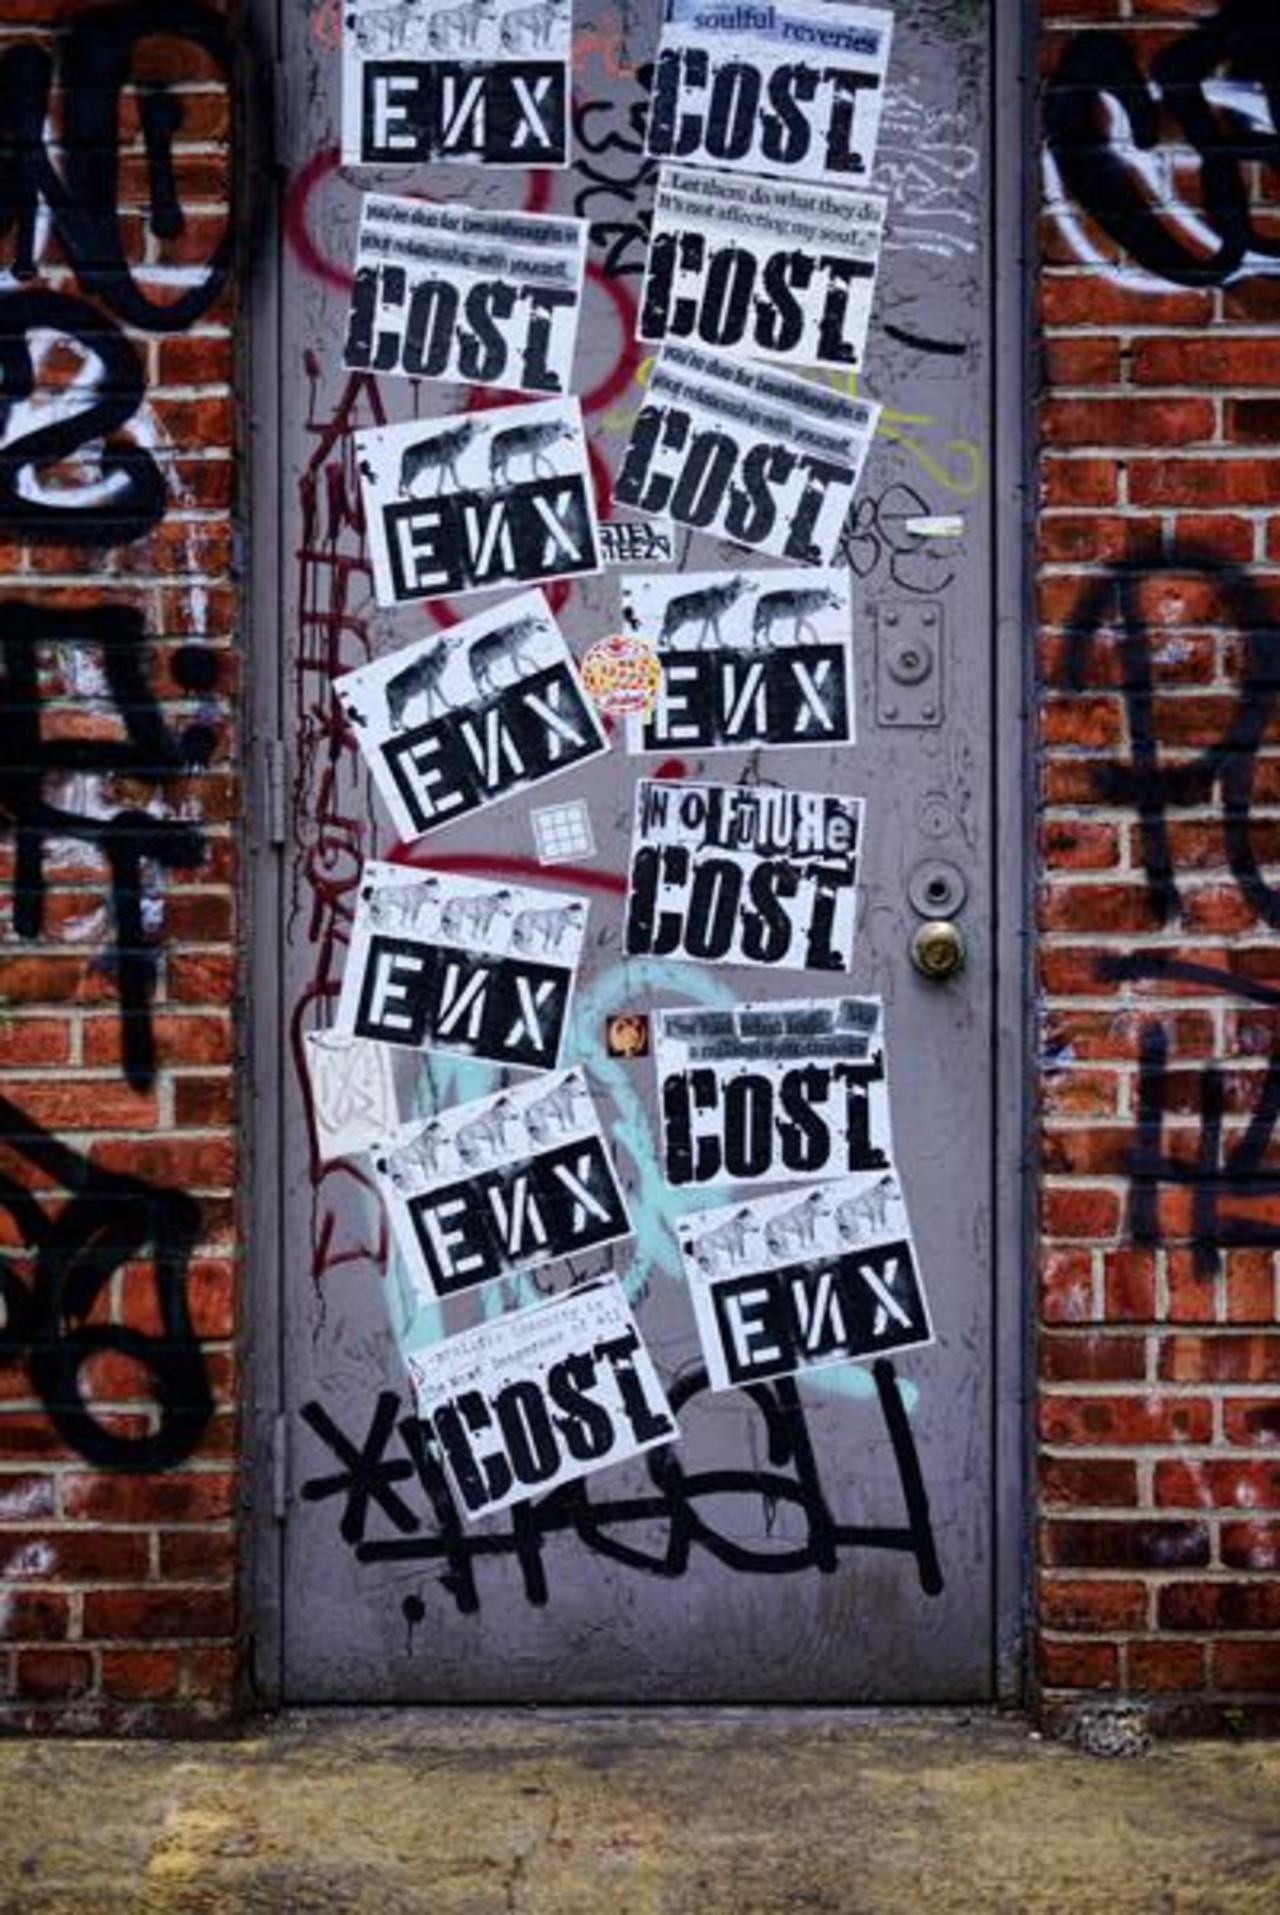 Continuation of my Raw #Brooklyn series - http://fotografyart.com/
#art #photography #graffiti #urbanart #newyork http://t.co/S03uBL3ulO